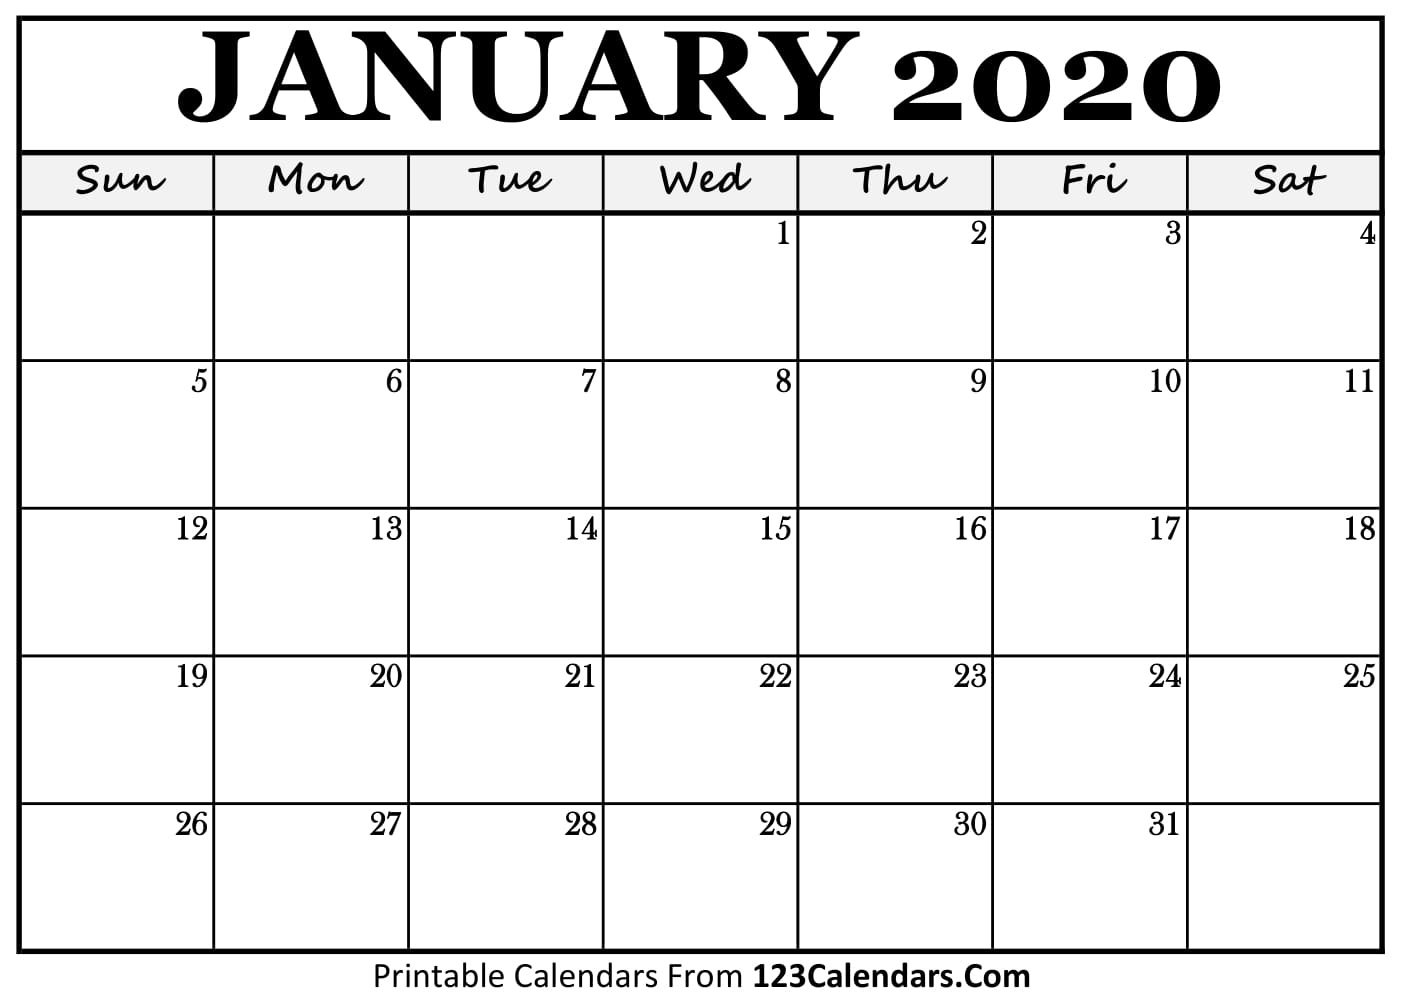 Free Printable Calendar | 123Calendars Dashing Monthly Monday To Sunday Calendars 2020 Printable Free Blank